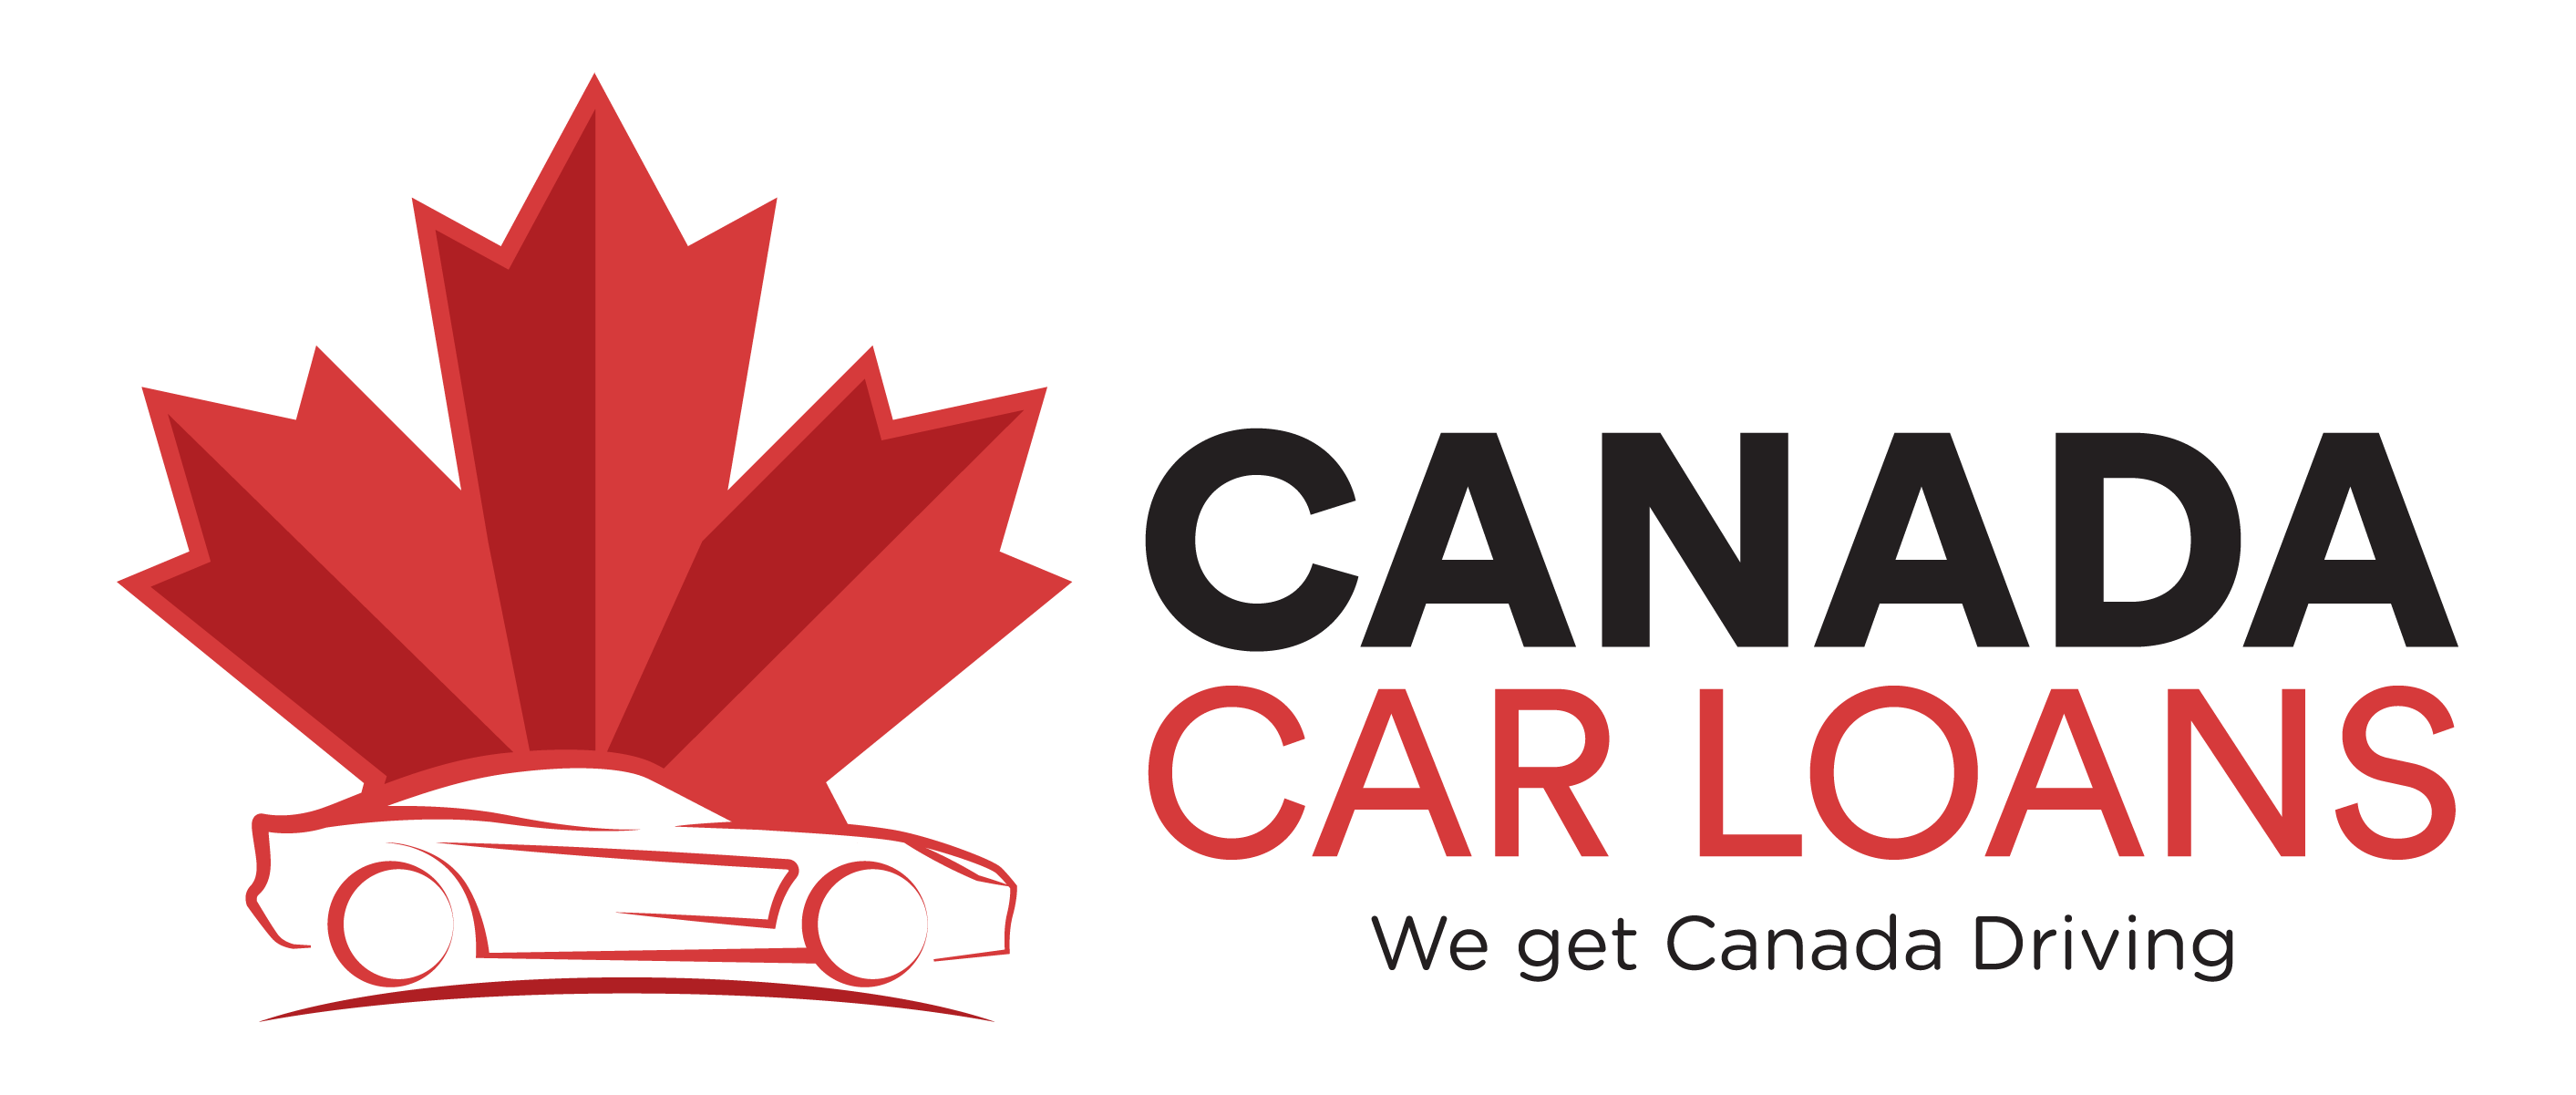 Canada Car Loans logo